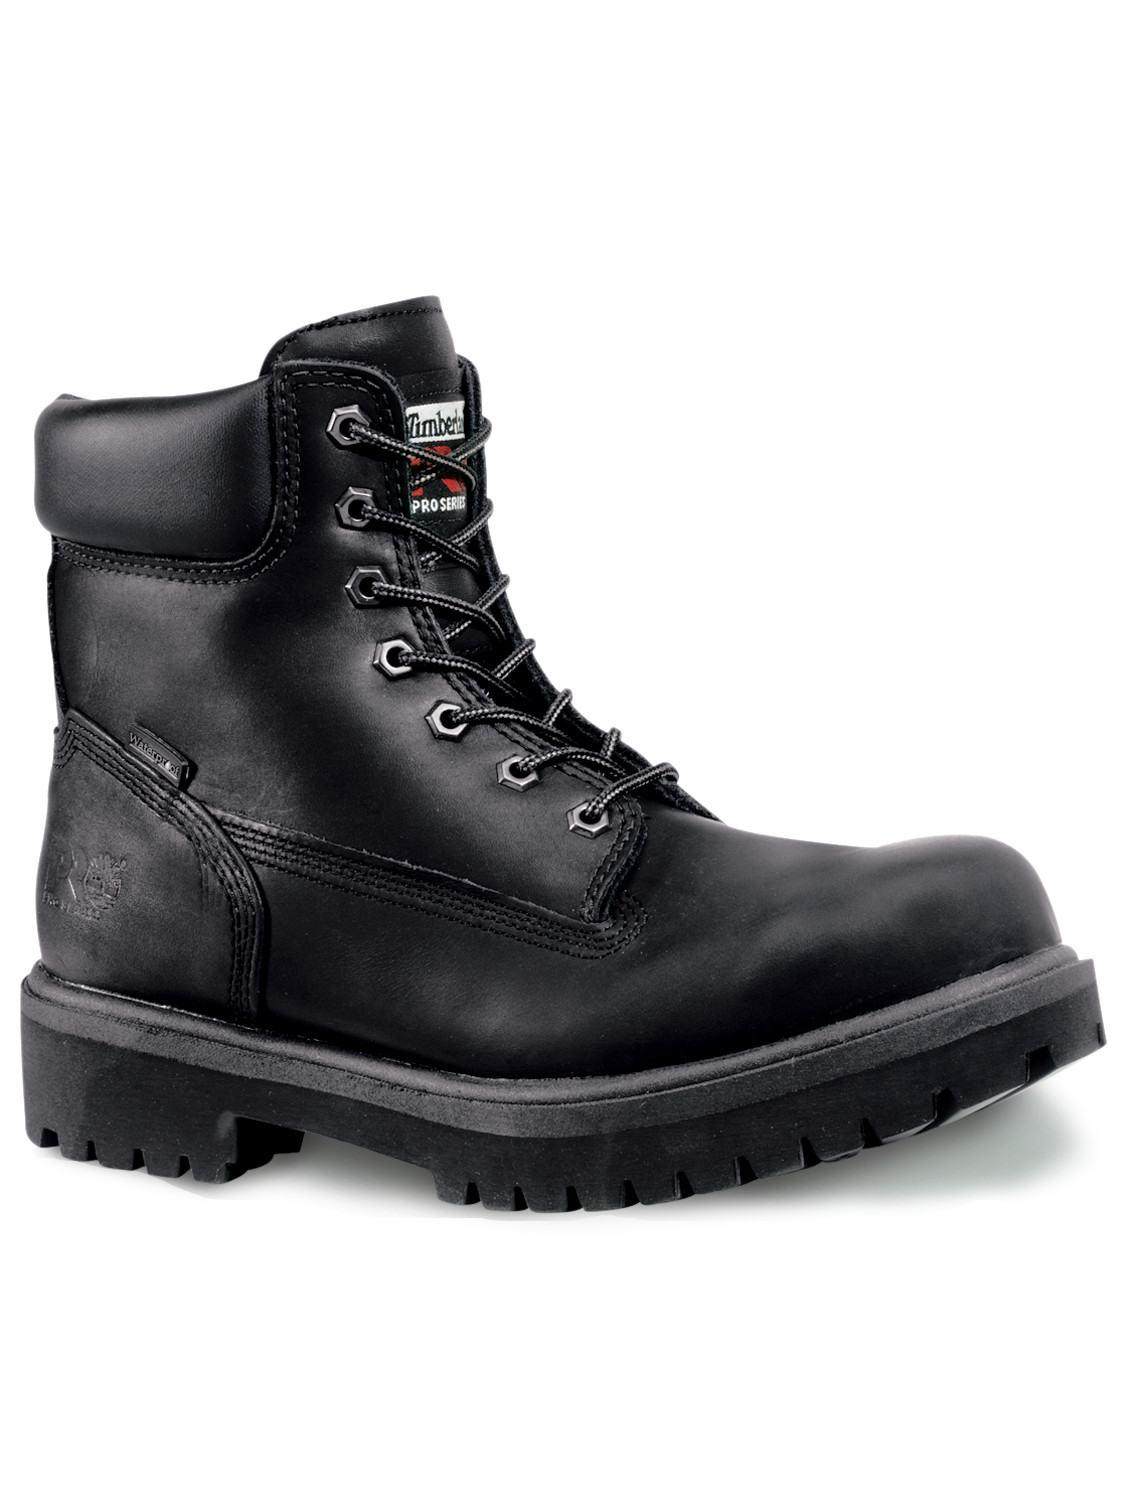 Direct Attach Waterproof 6" Steel Toe Work Boots